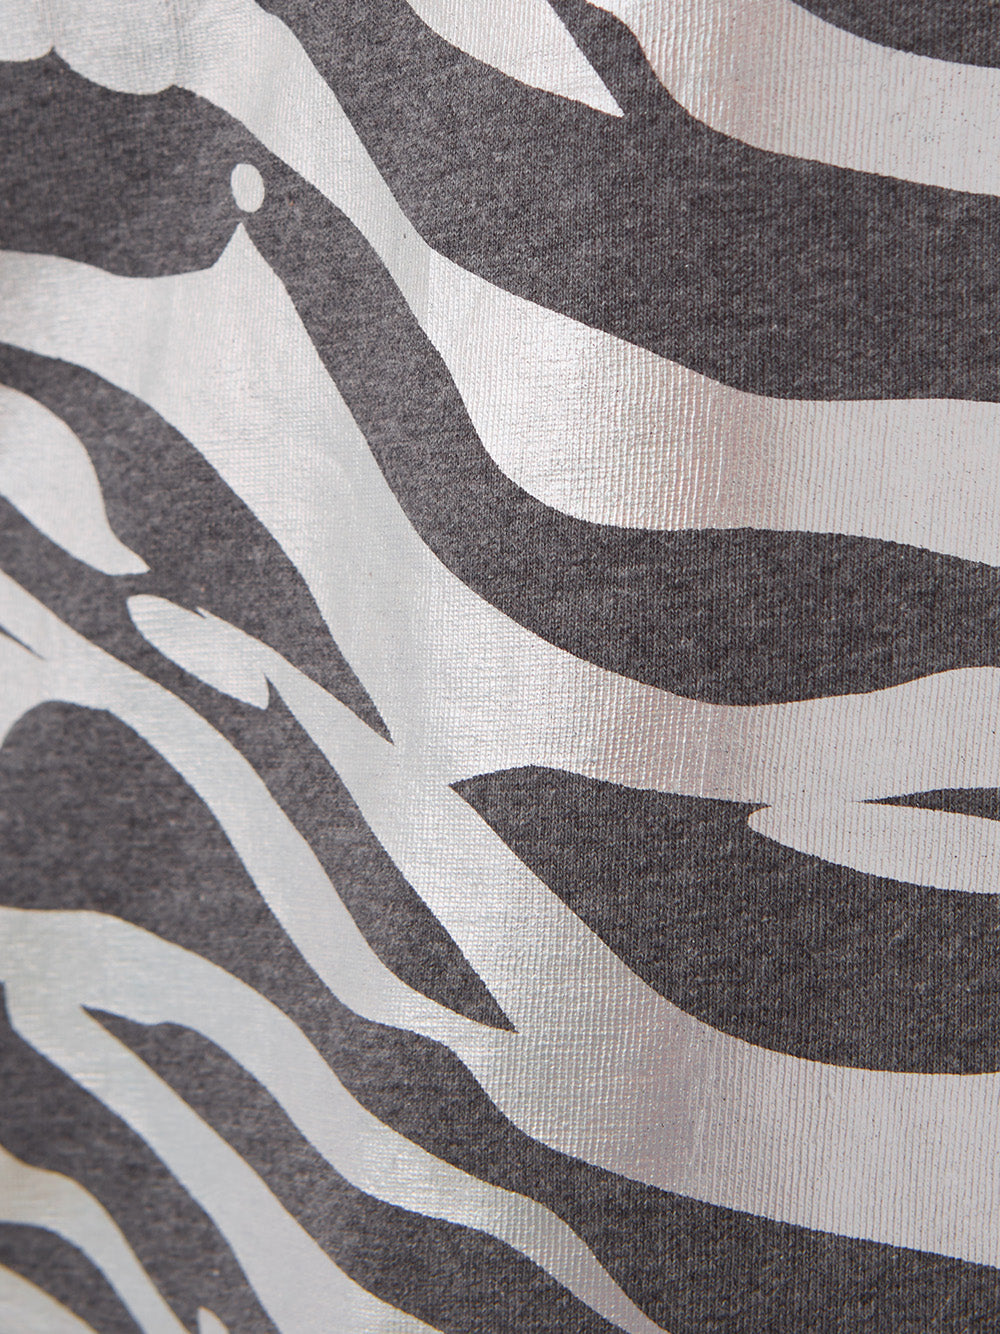 Kenzo Metal Animal Print T-Shirt